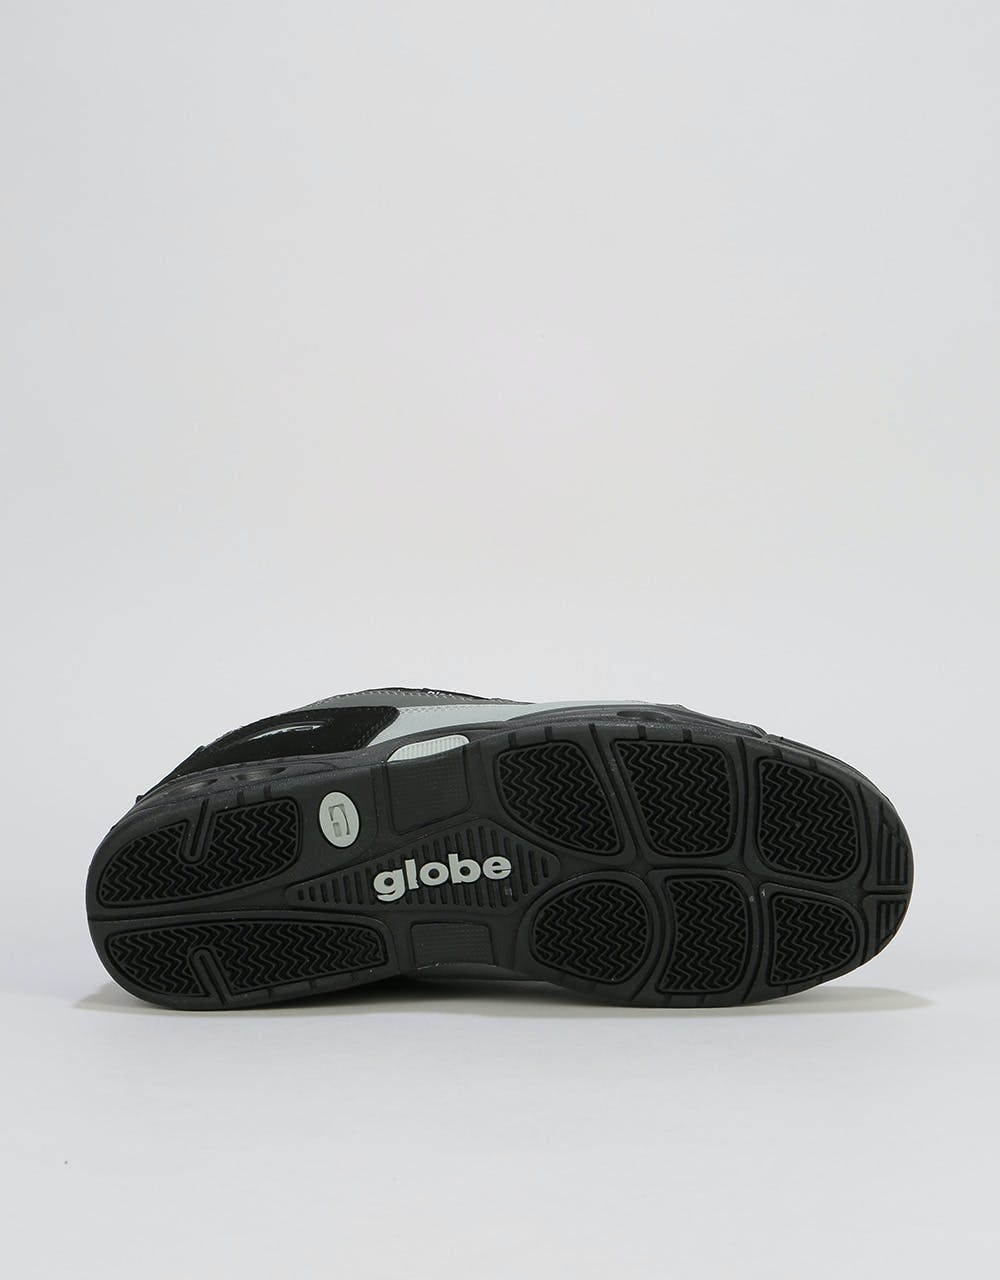 Globe CT IV Classic Skate Shoes - Battleship/Black